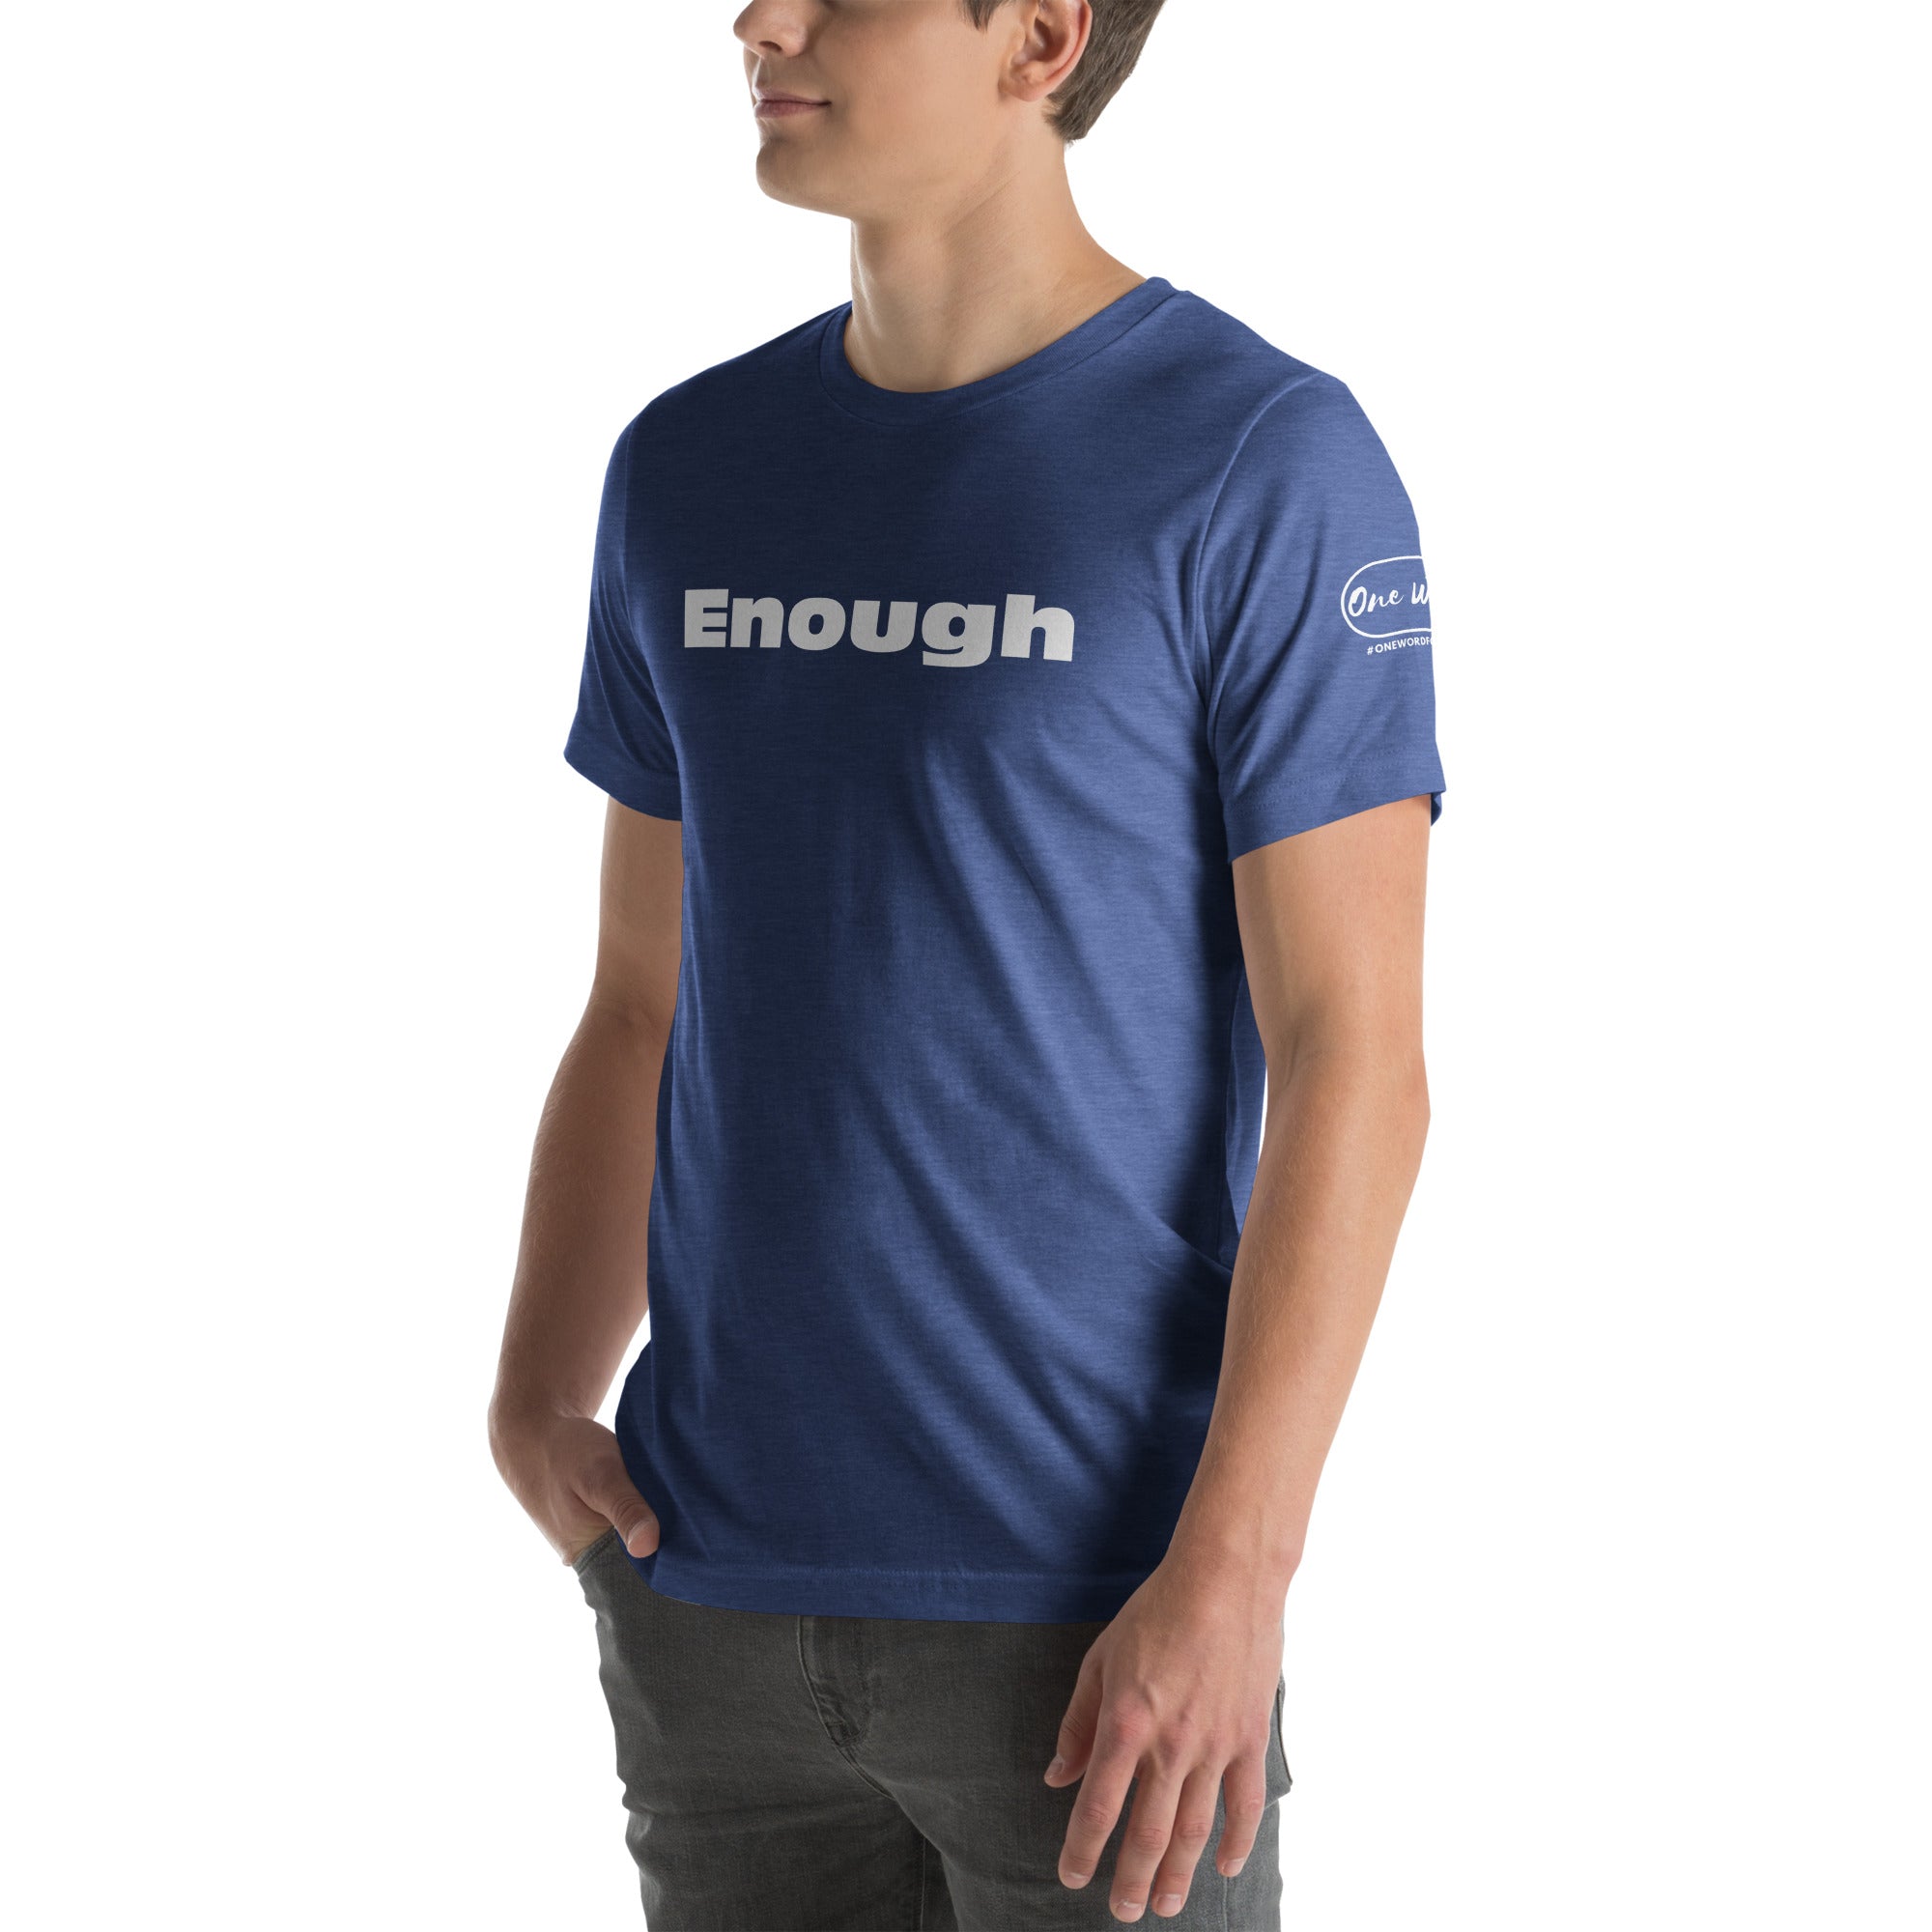 Enough-Inspired T-Shirt | Faith Apparel | One-Word Unisex T-Shirt